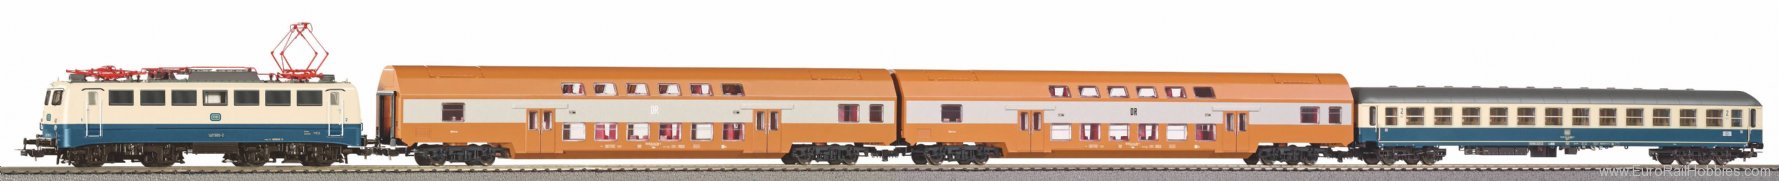 Piko 58146 GER: Excl. Set 2024 Electric locomotive BR 14